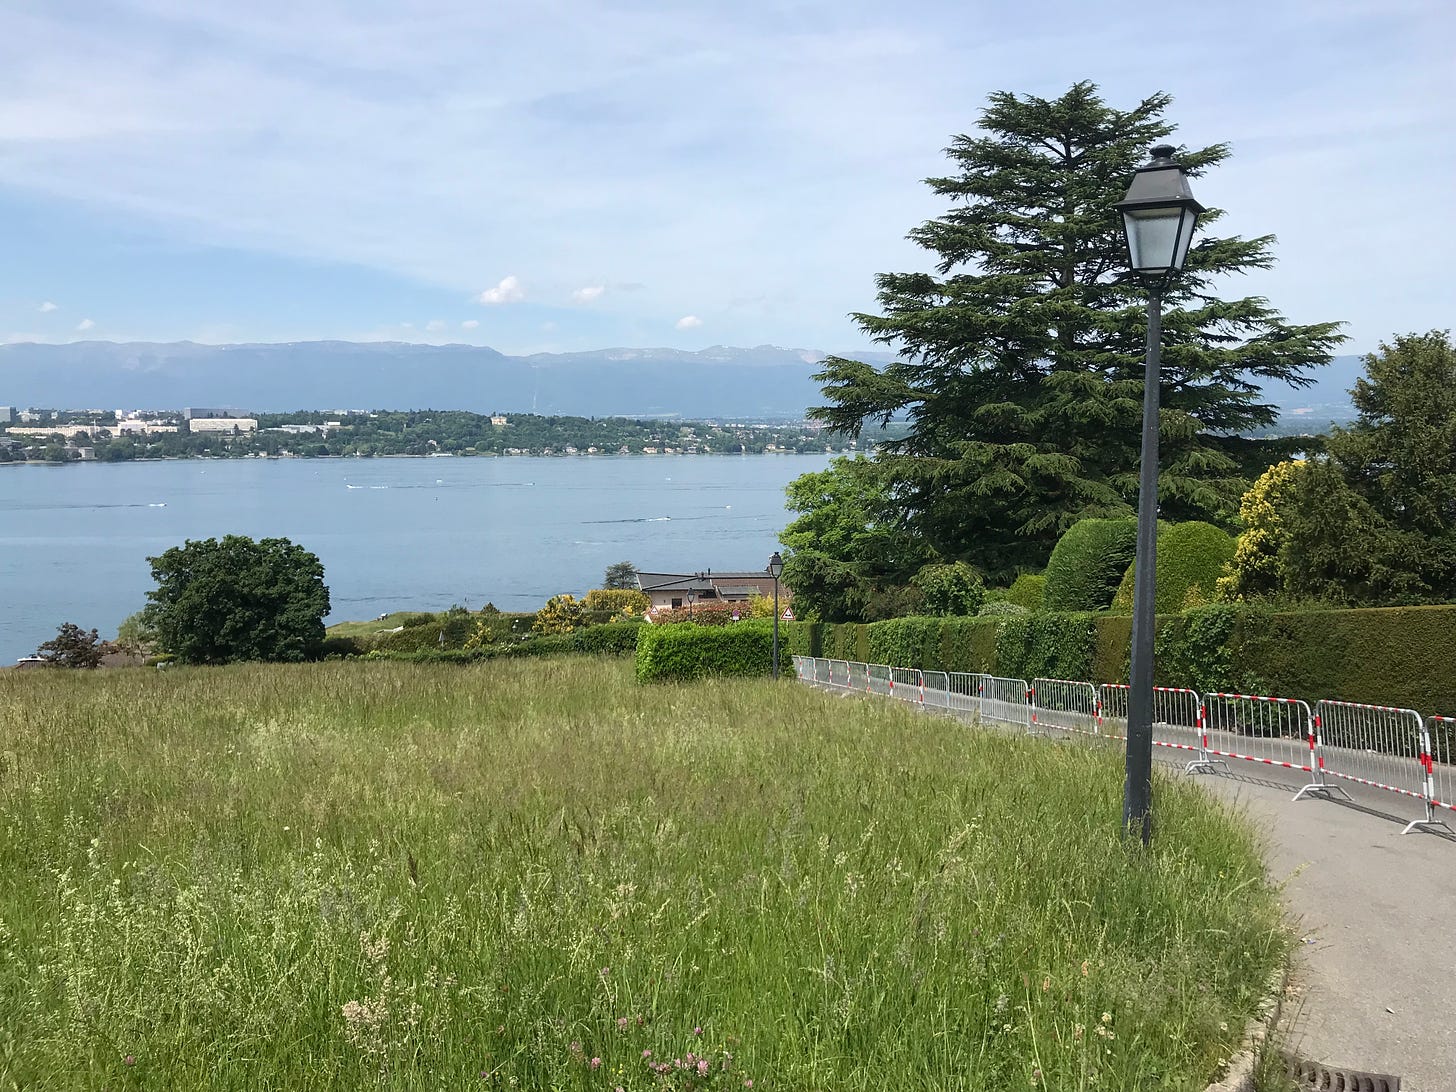 Lake Geneva in the summer time